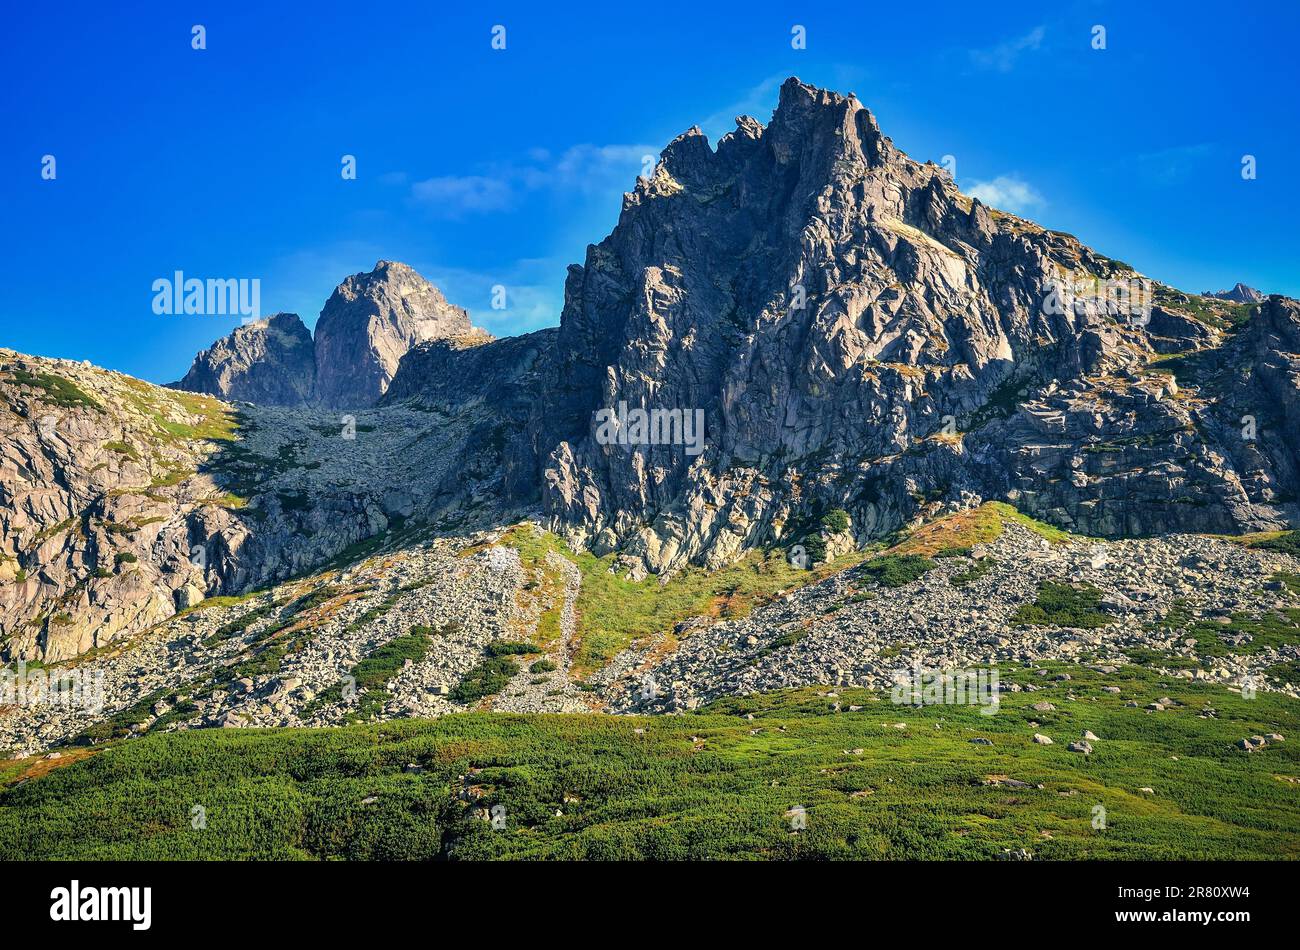 Summer mountain landscape in Slovak mountains. Beautiful rocky peaks in High Tatra, Slovakia. Stock Photo